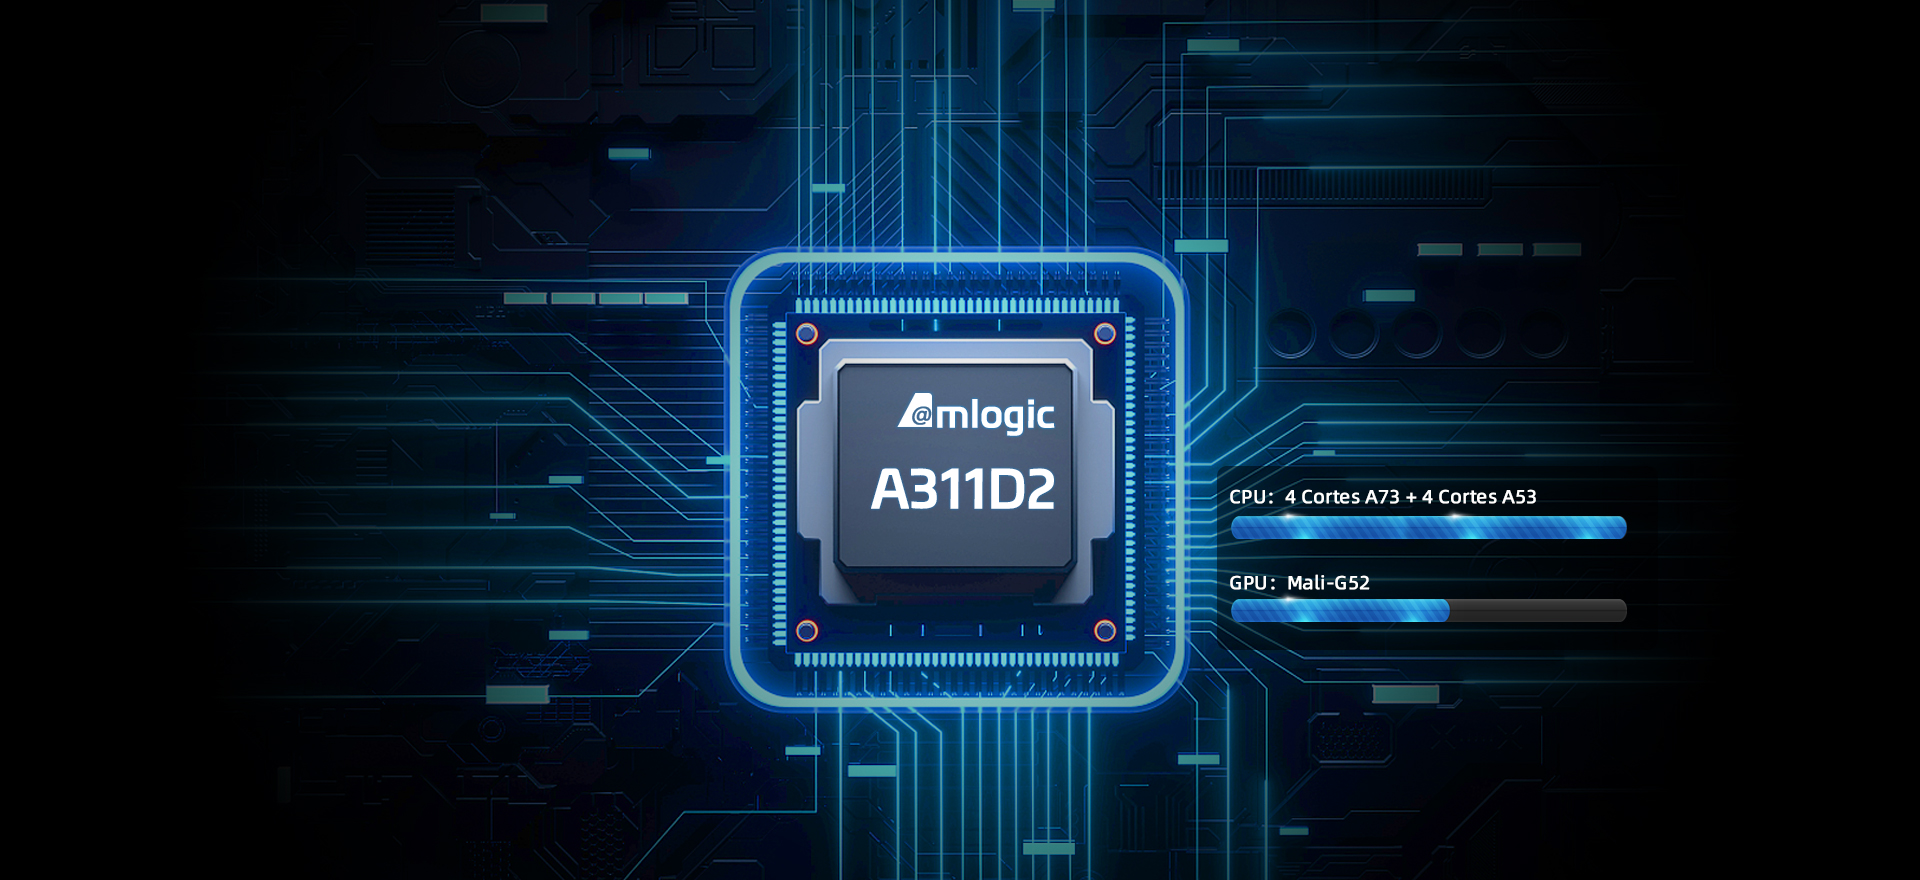 A311D2 High Performance Processor